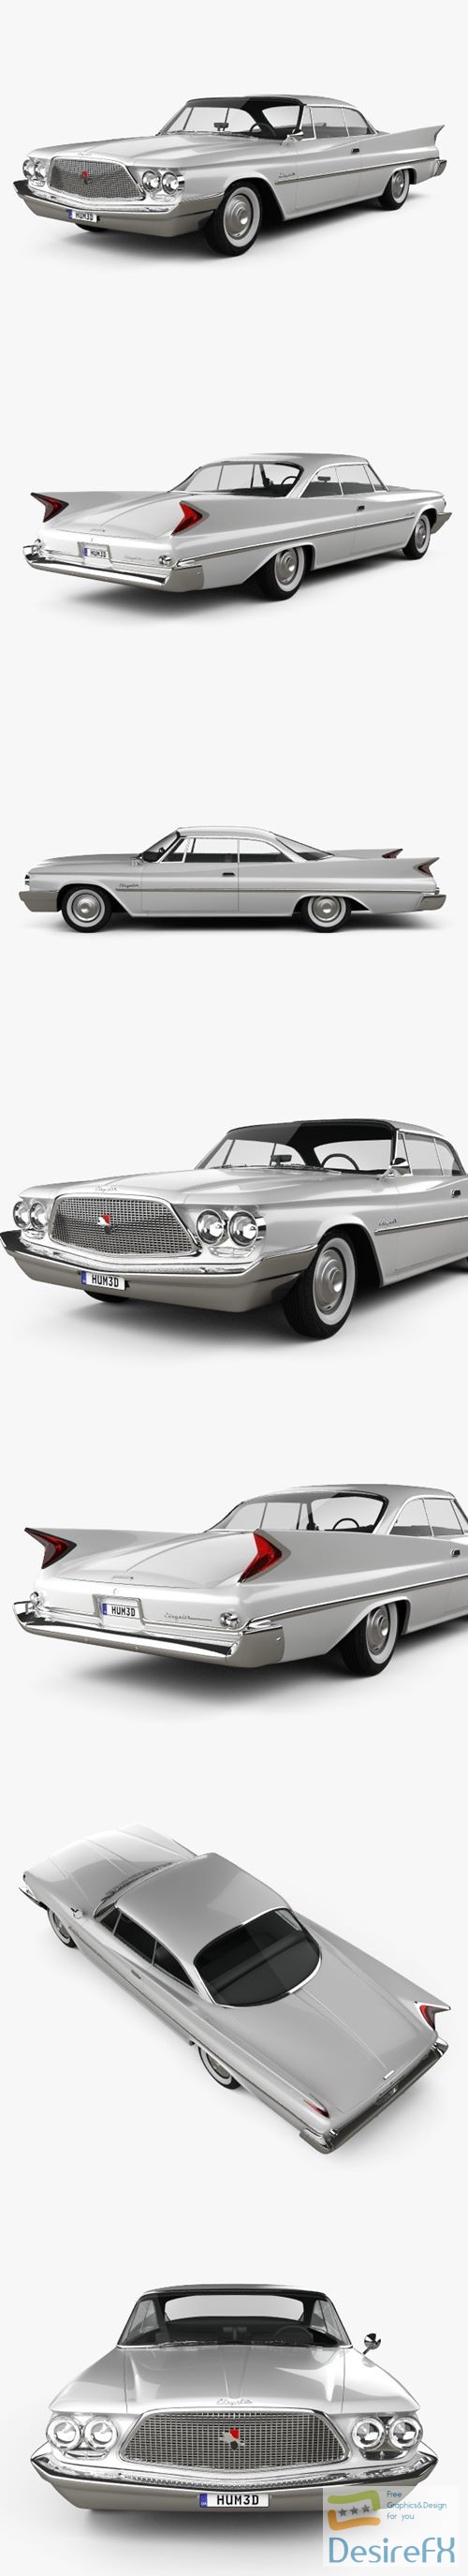 Chrysler Saratoga hardtop coupe 1960 3D Model